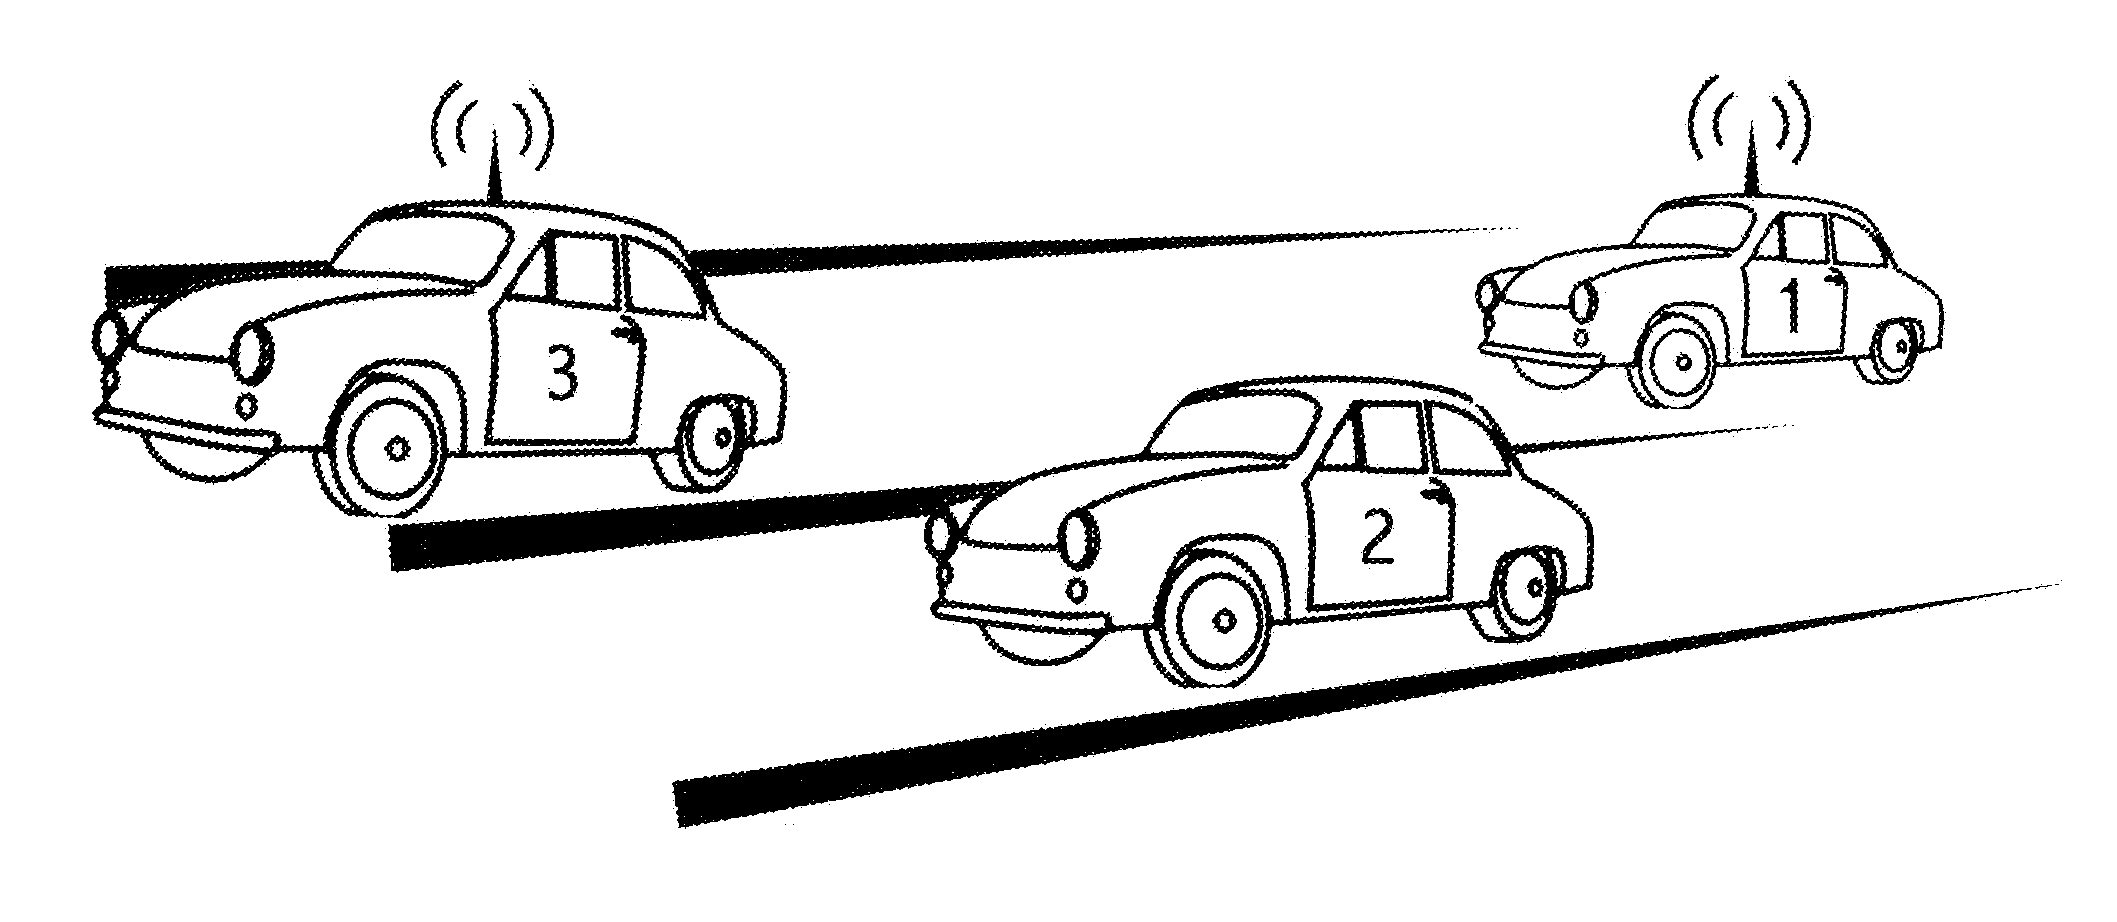 Extra-vehicular Anti-collision system